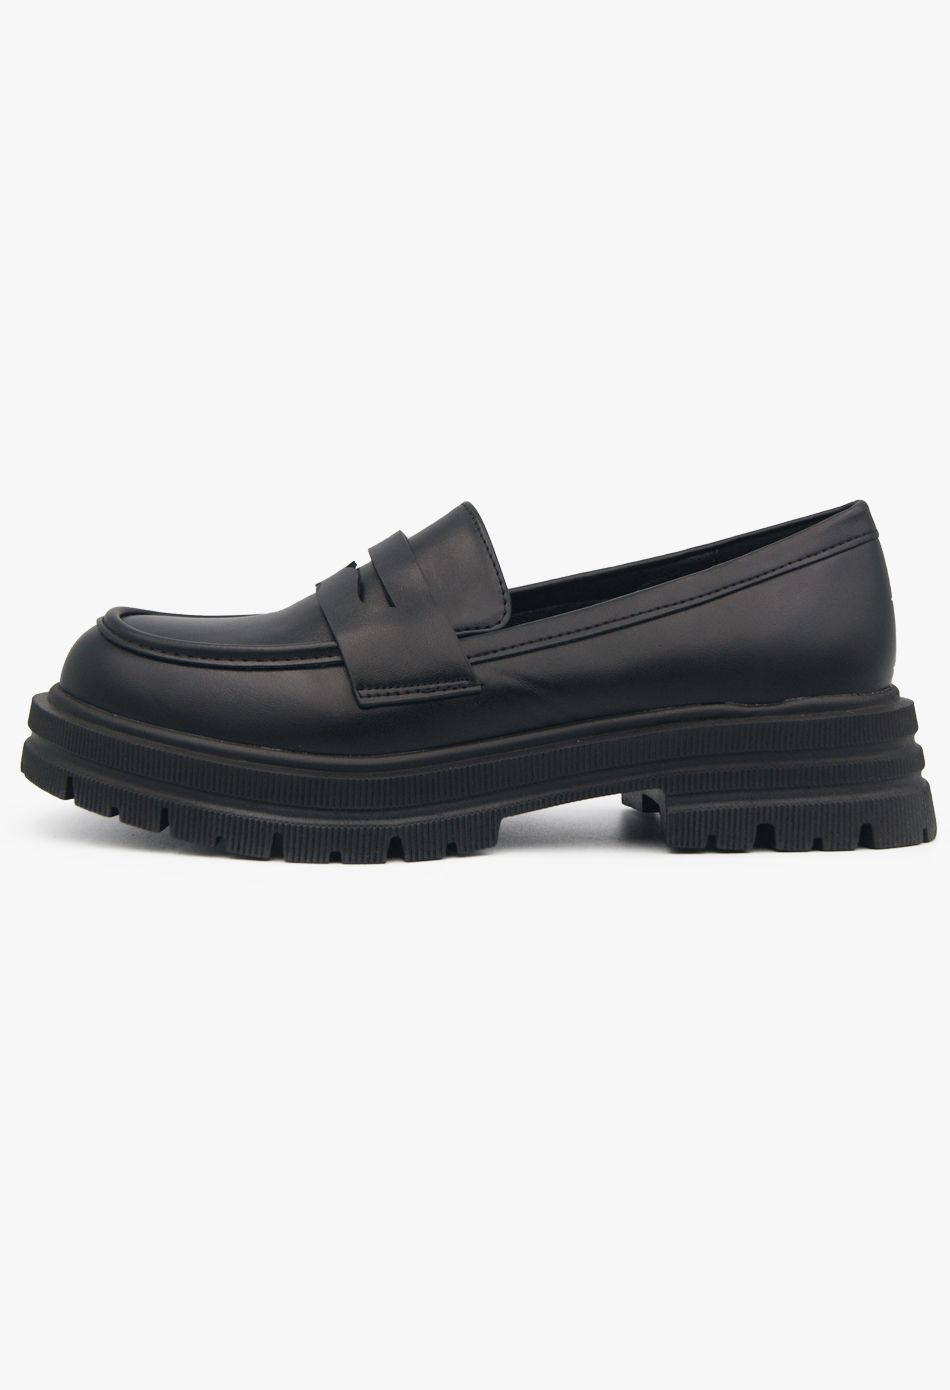 Loafers με Τρακτερωτή Σόλα Μαύρο / OM2209-1-black Γυναικεία Oxfords & Loafers joya.gr